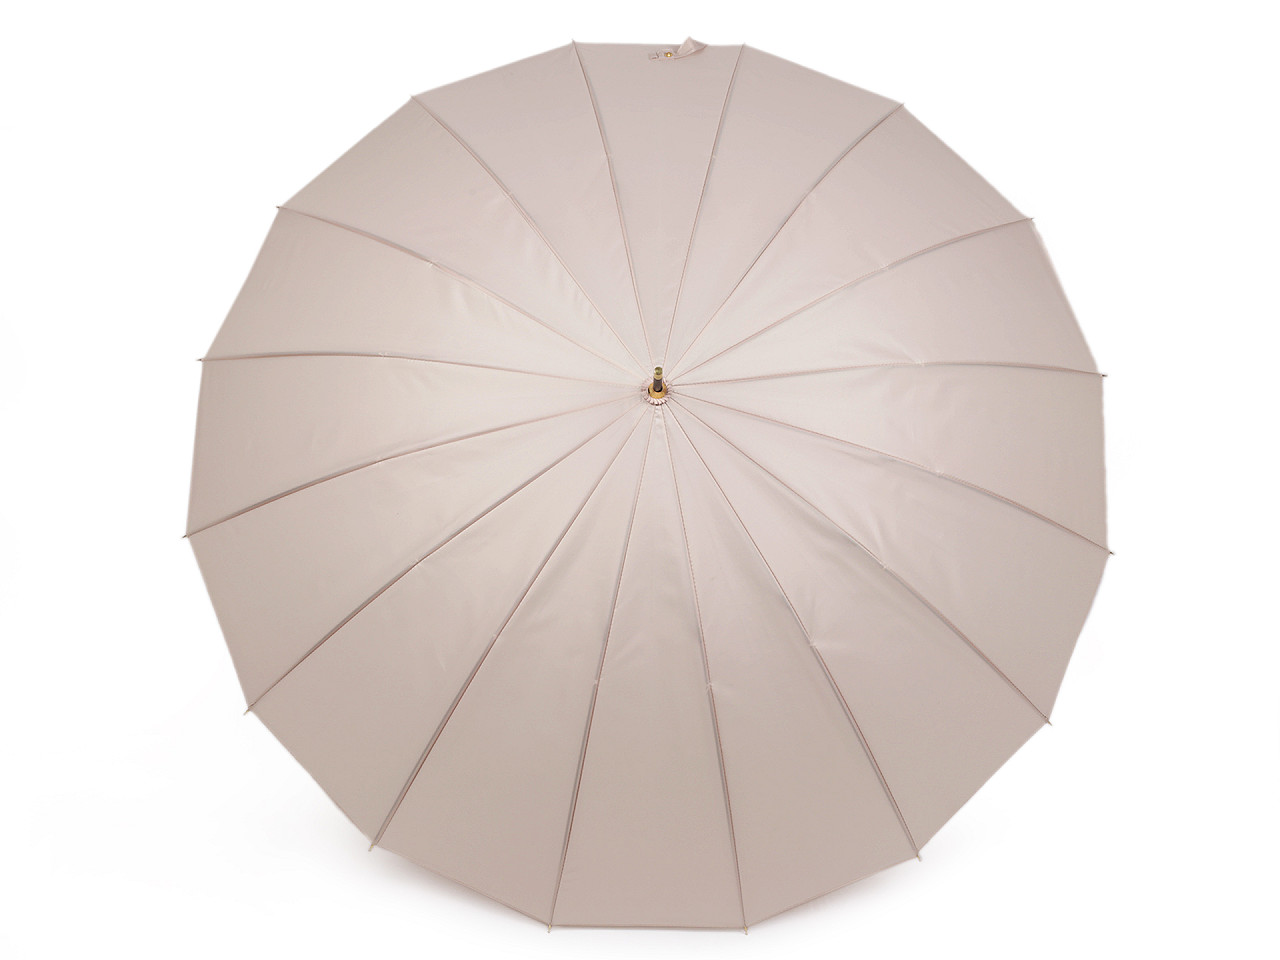 Damen-Automatik-Regenschirm, hellbeige, 1 Stück